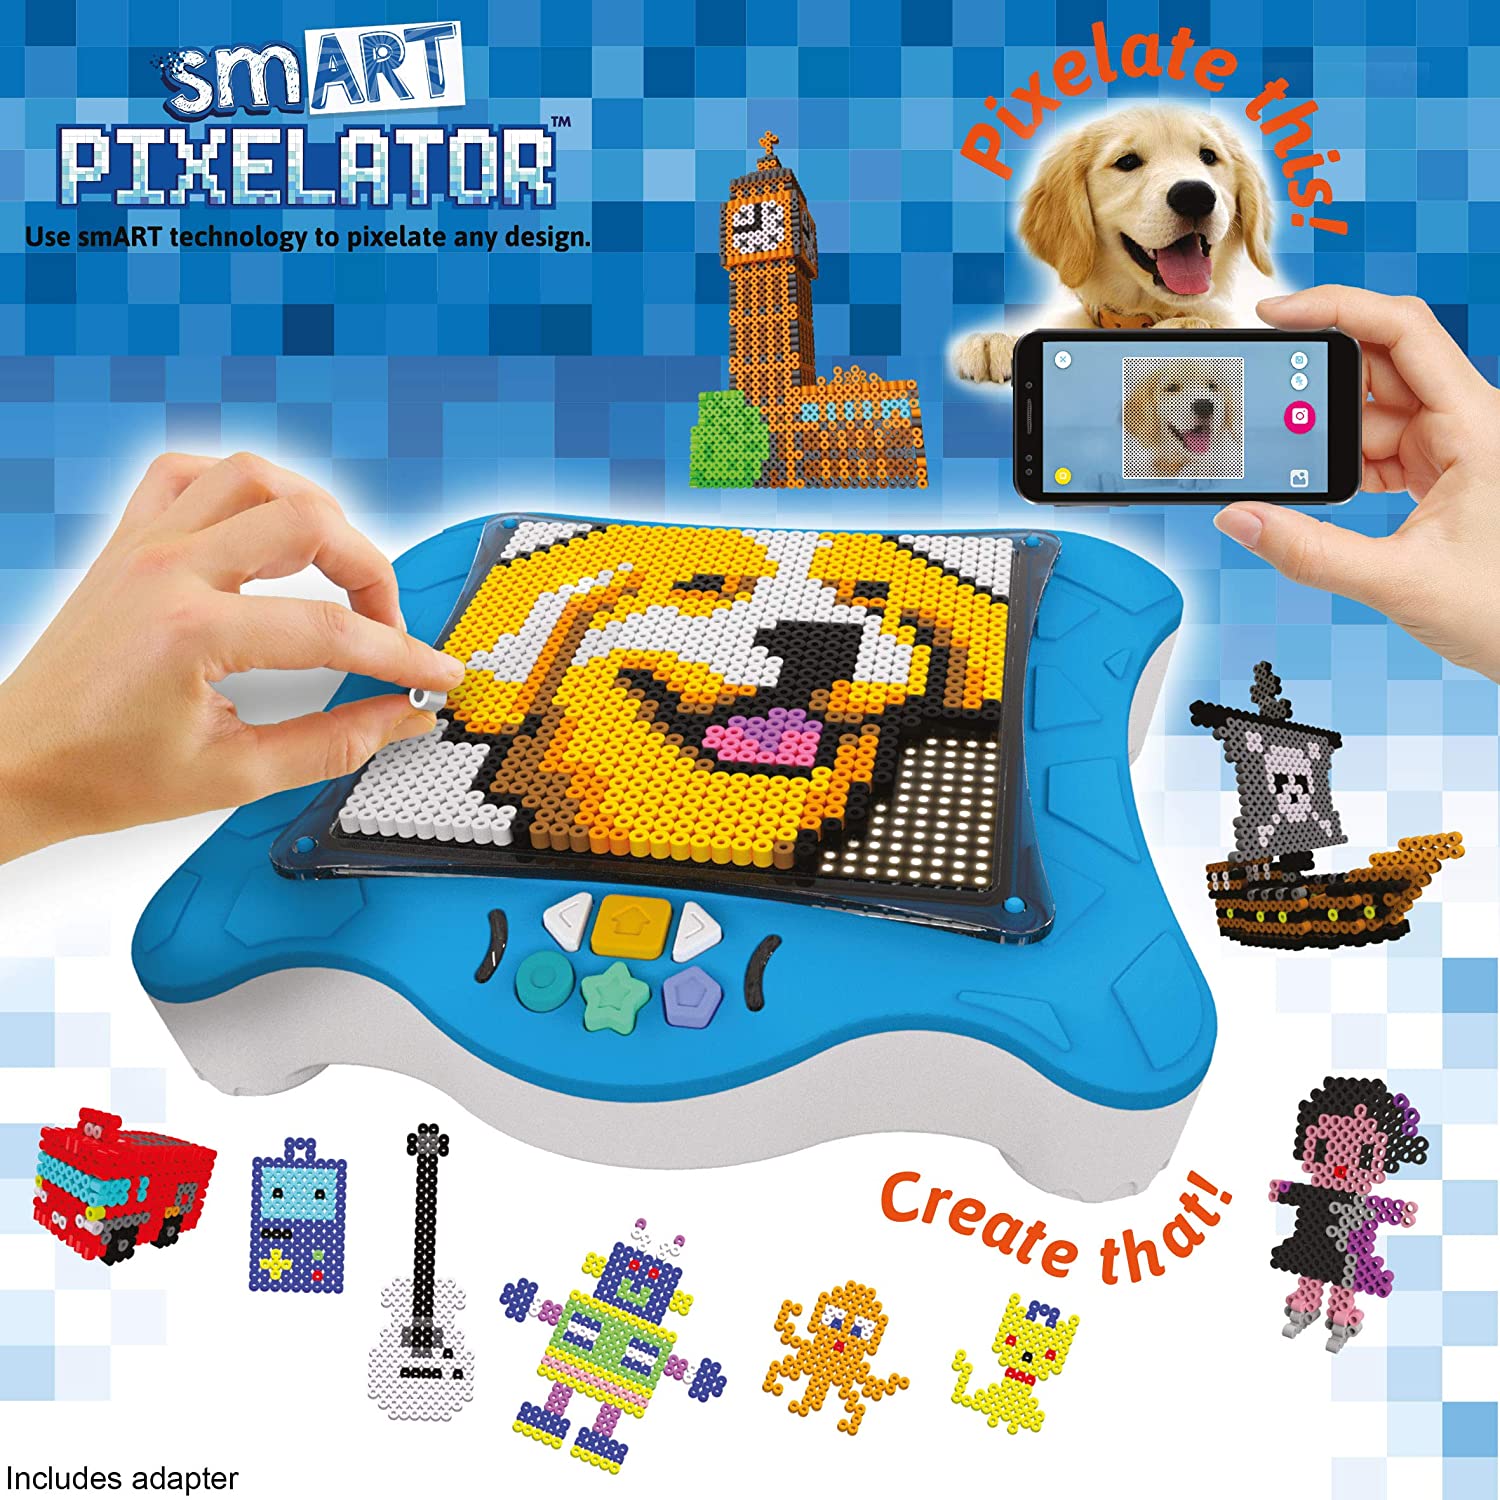 smART Pixelator from Flycatcher toys review